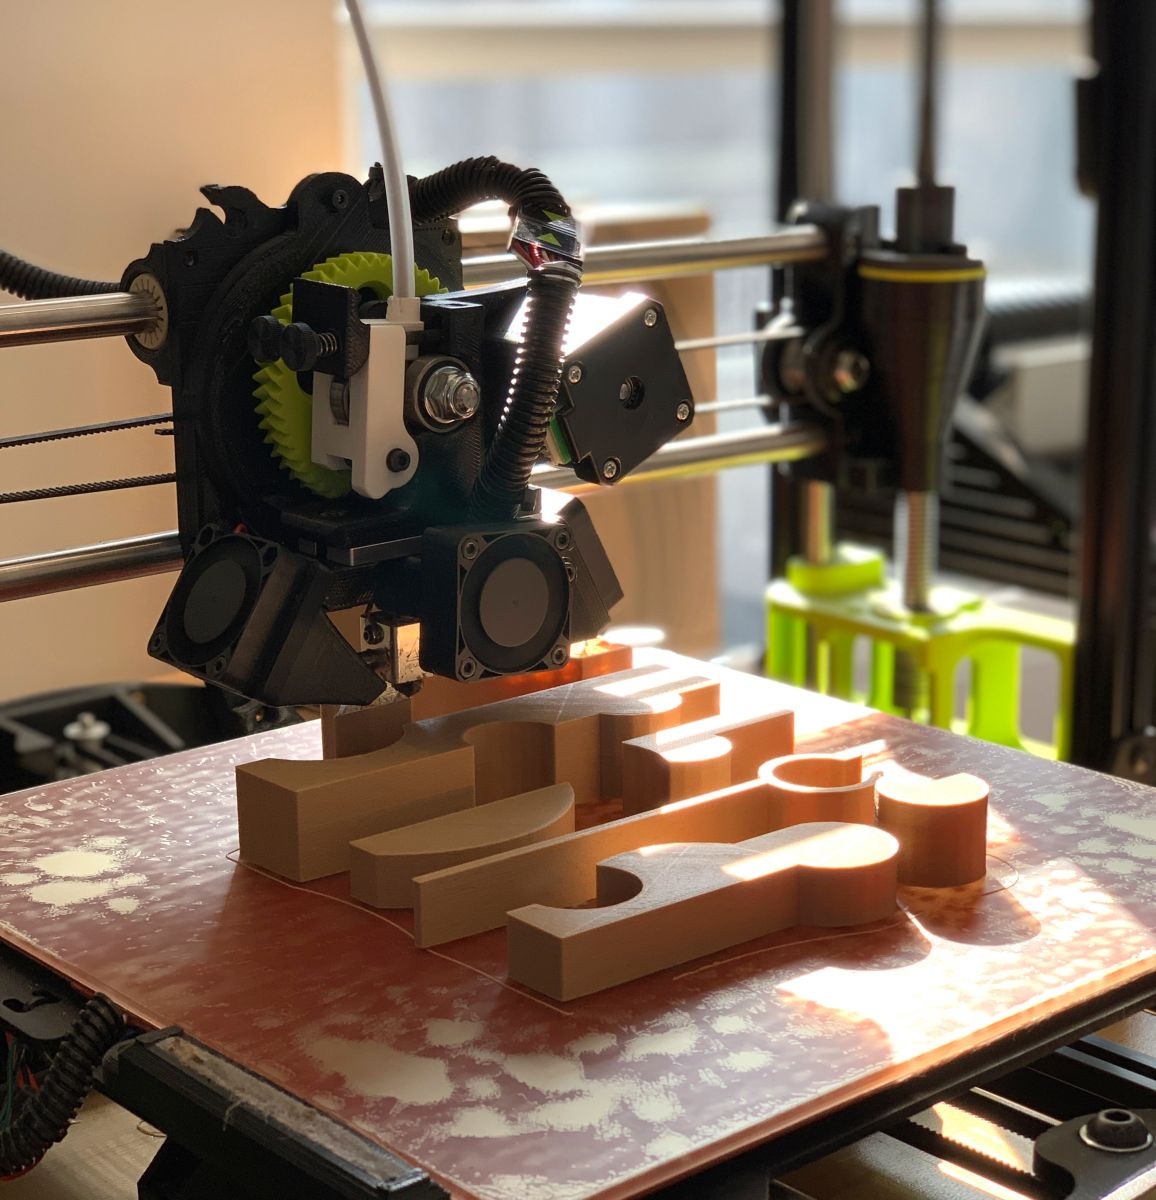 Lulzbot Taz 3D Printer